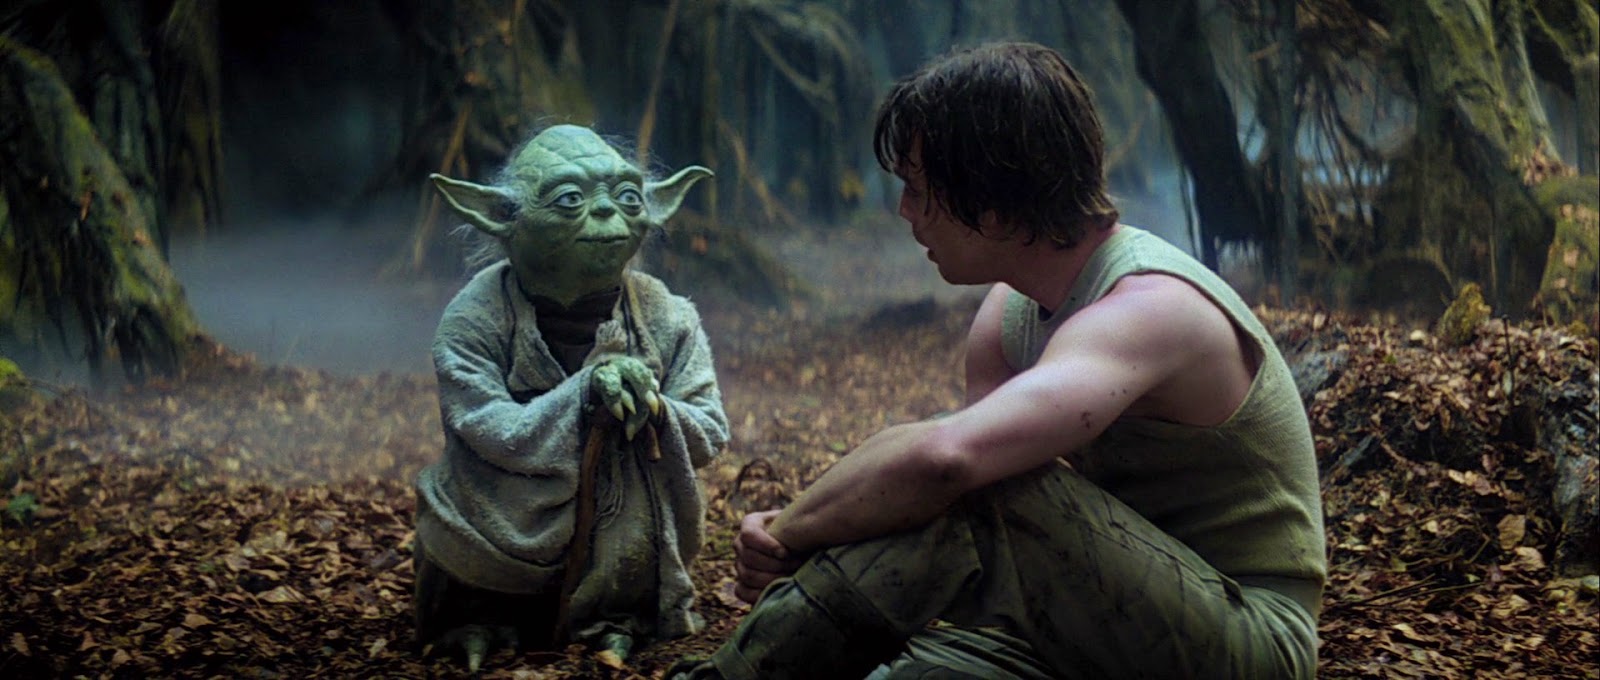 Master Yoda and Luke Skywalker